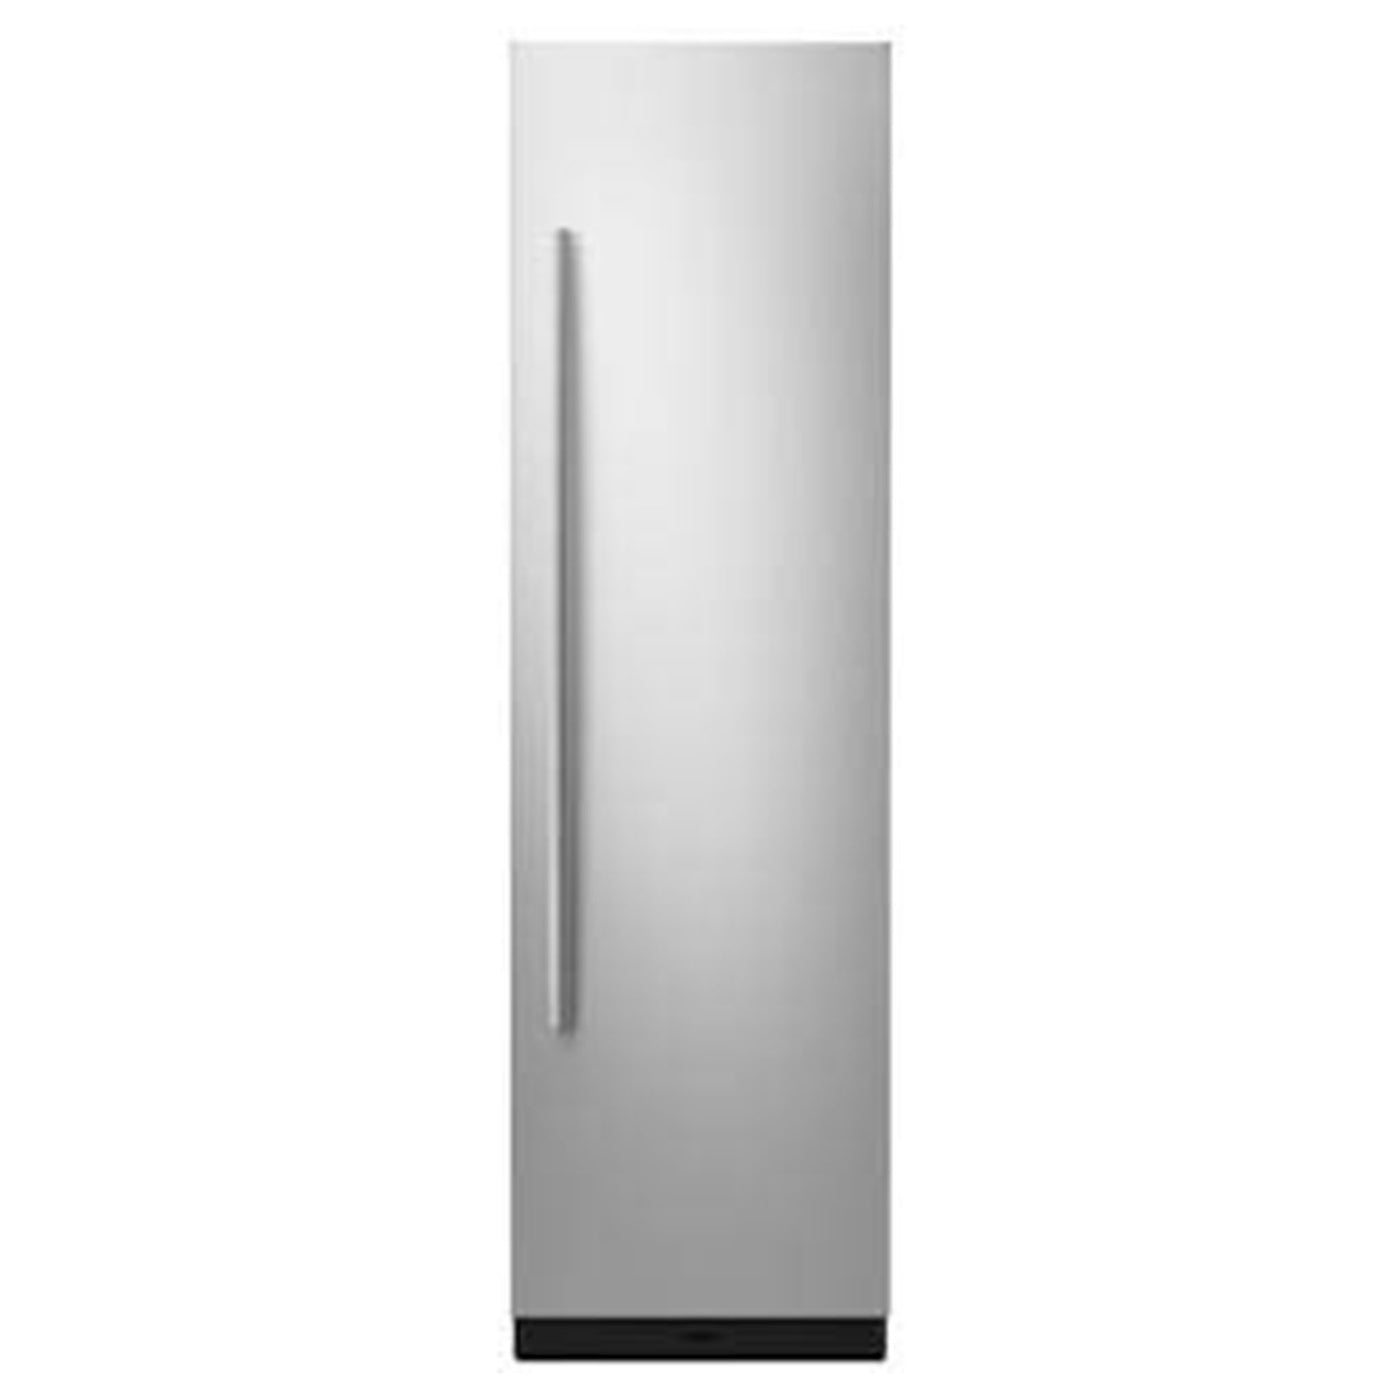 24" Panel-Ready Built-In Column Refrigerator, Right Swing